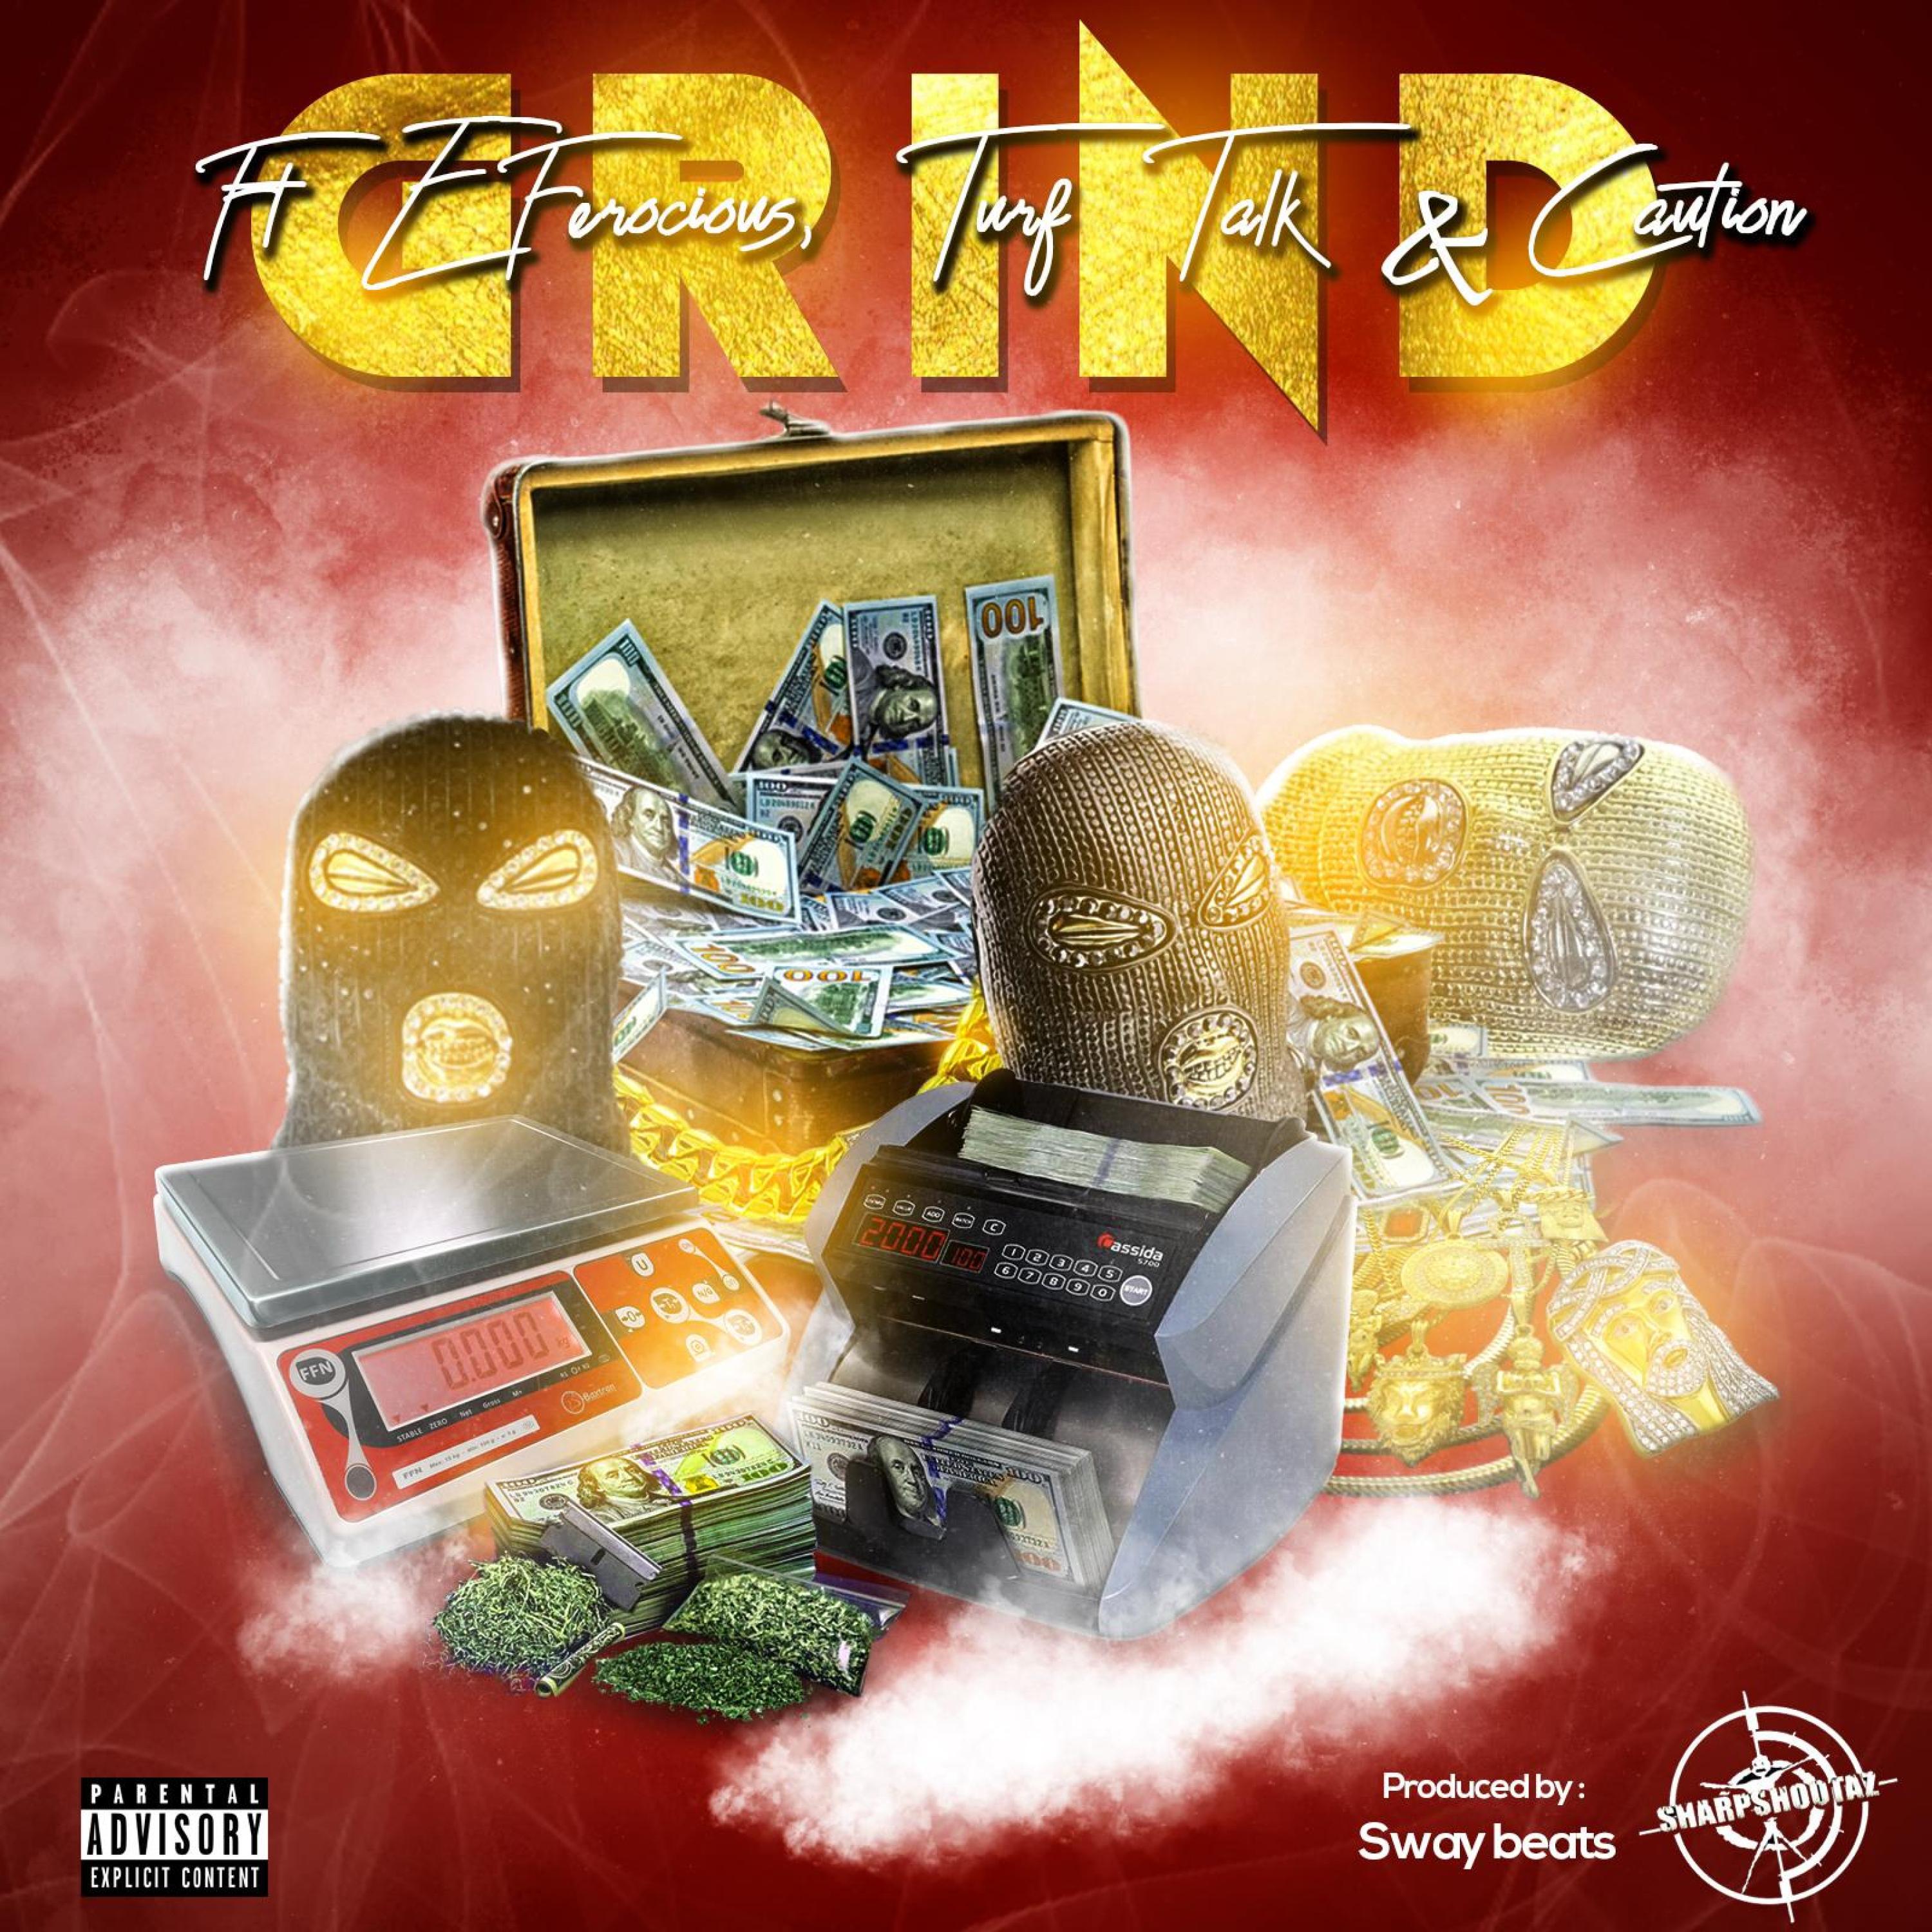 e-ferocious - GRIND (feat. TURF TALK, CAUTION & KAOS)